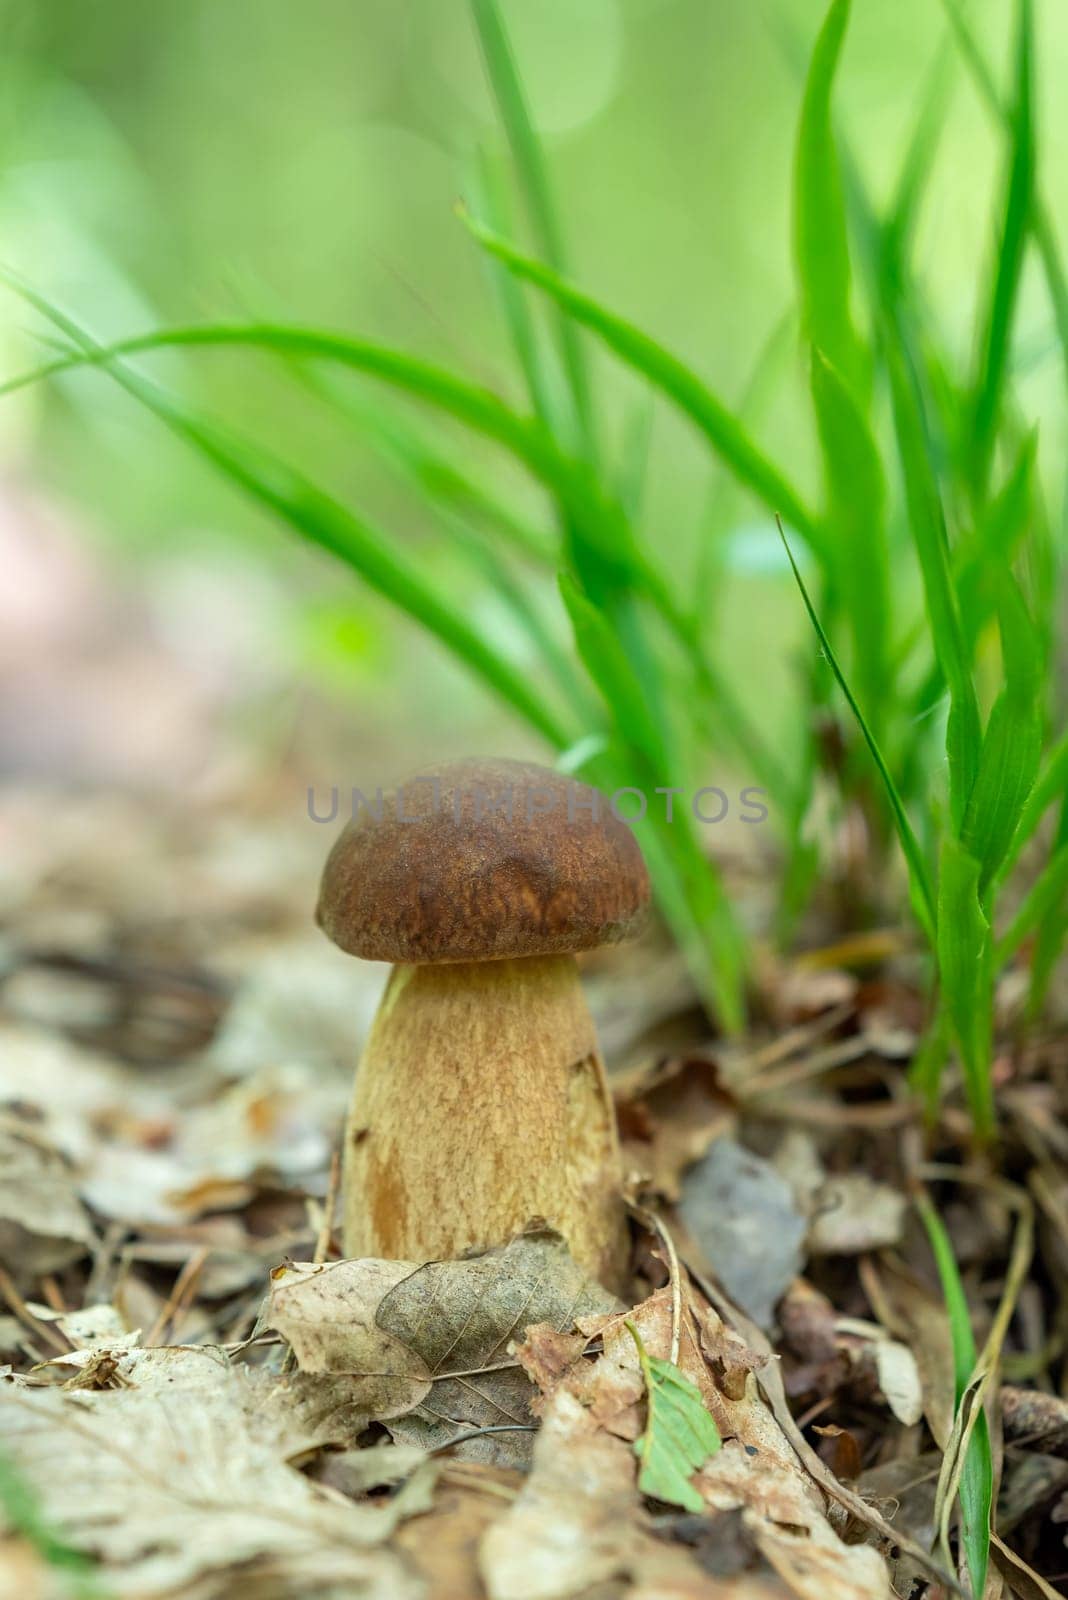 Small porcini mushroom growing in foliage near green grass by VitaliiPetrushenko